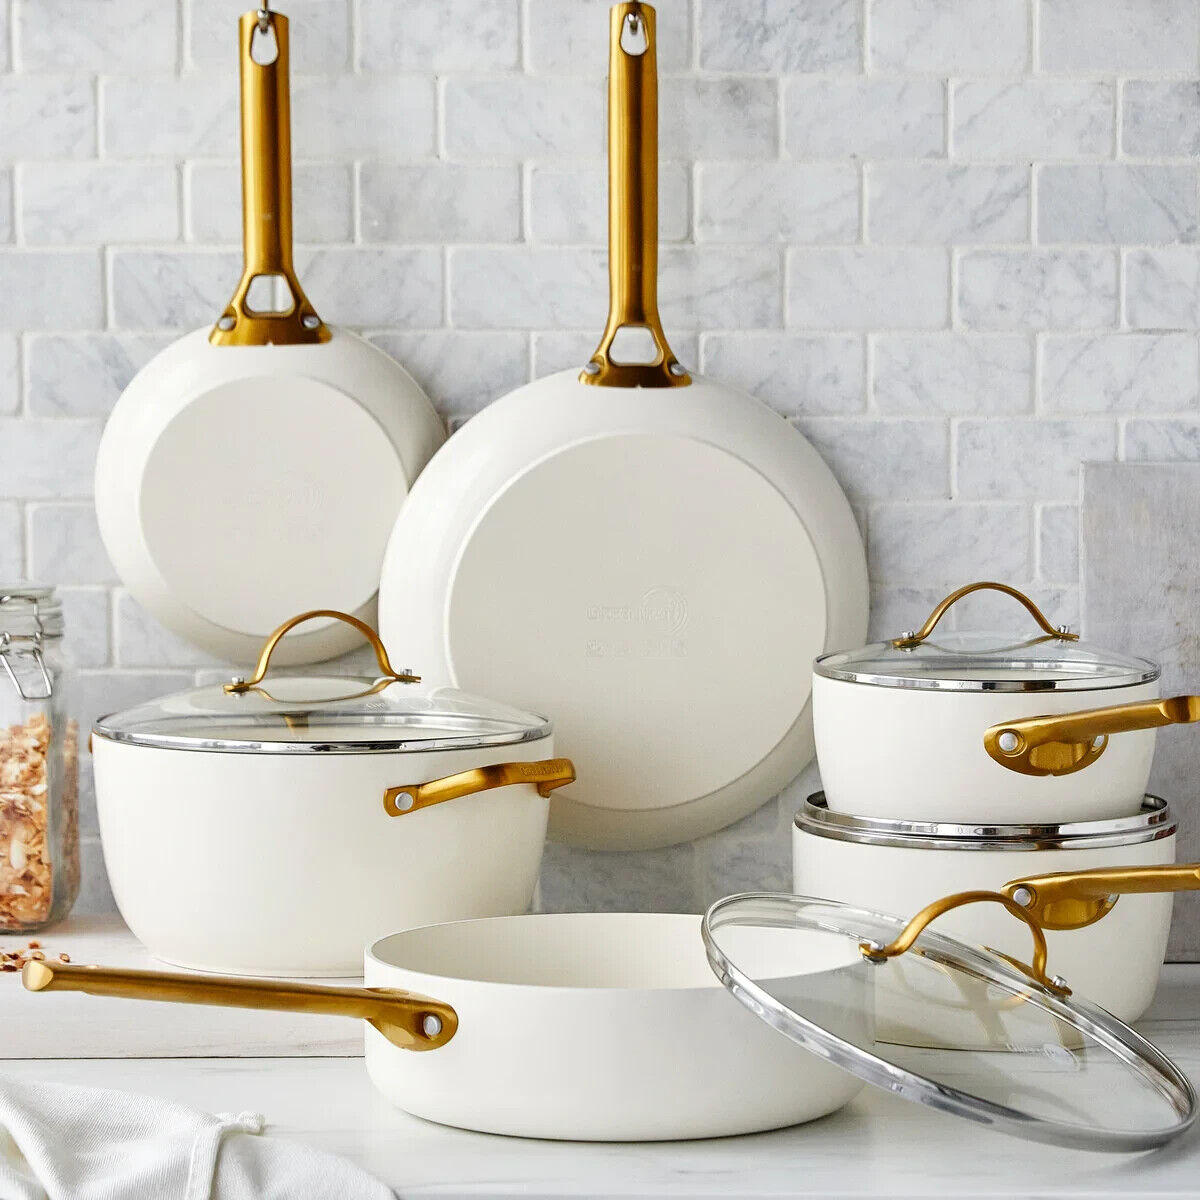 GreenPan™ Reserve Ceramic Nonstick 10-Piece Cookware Set